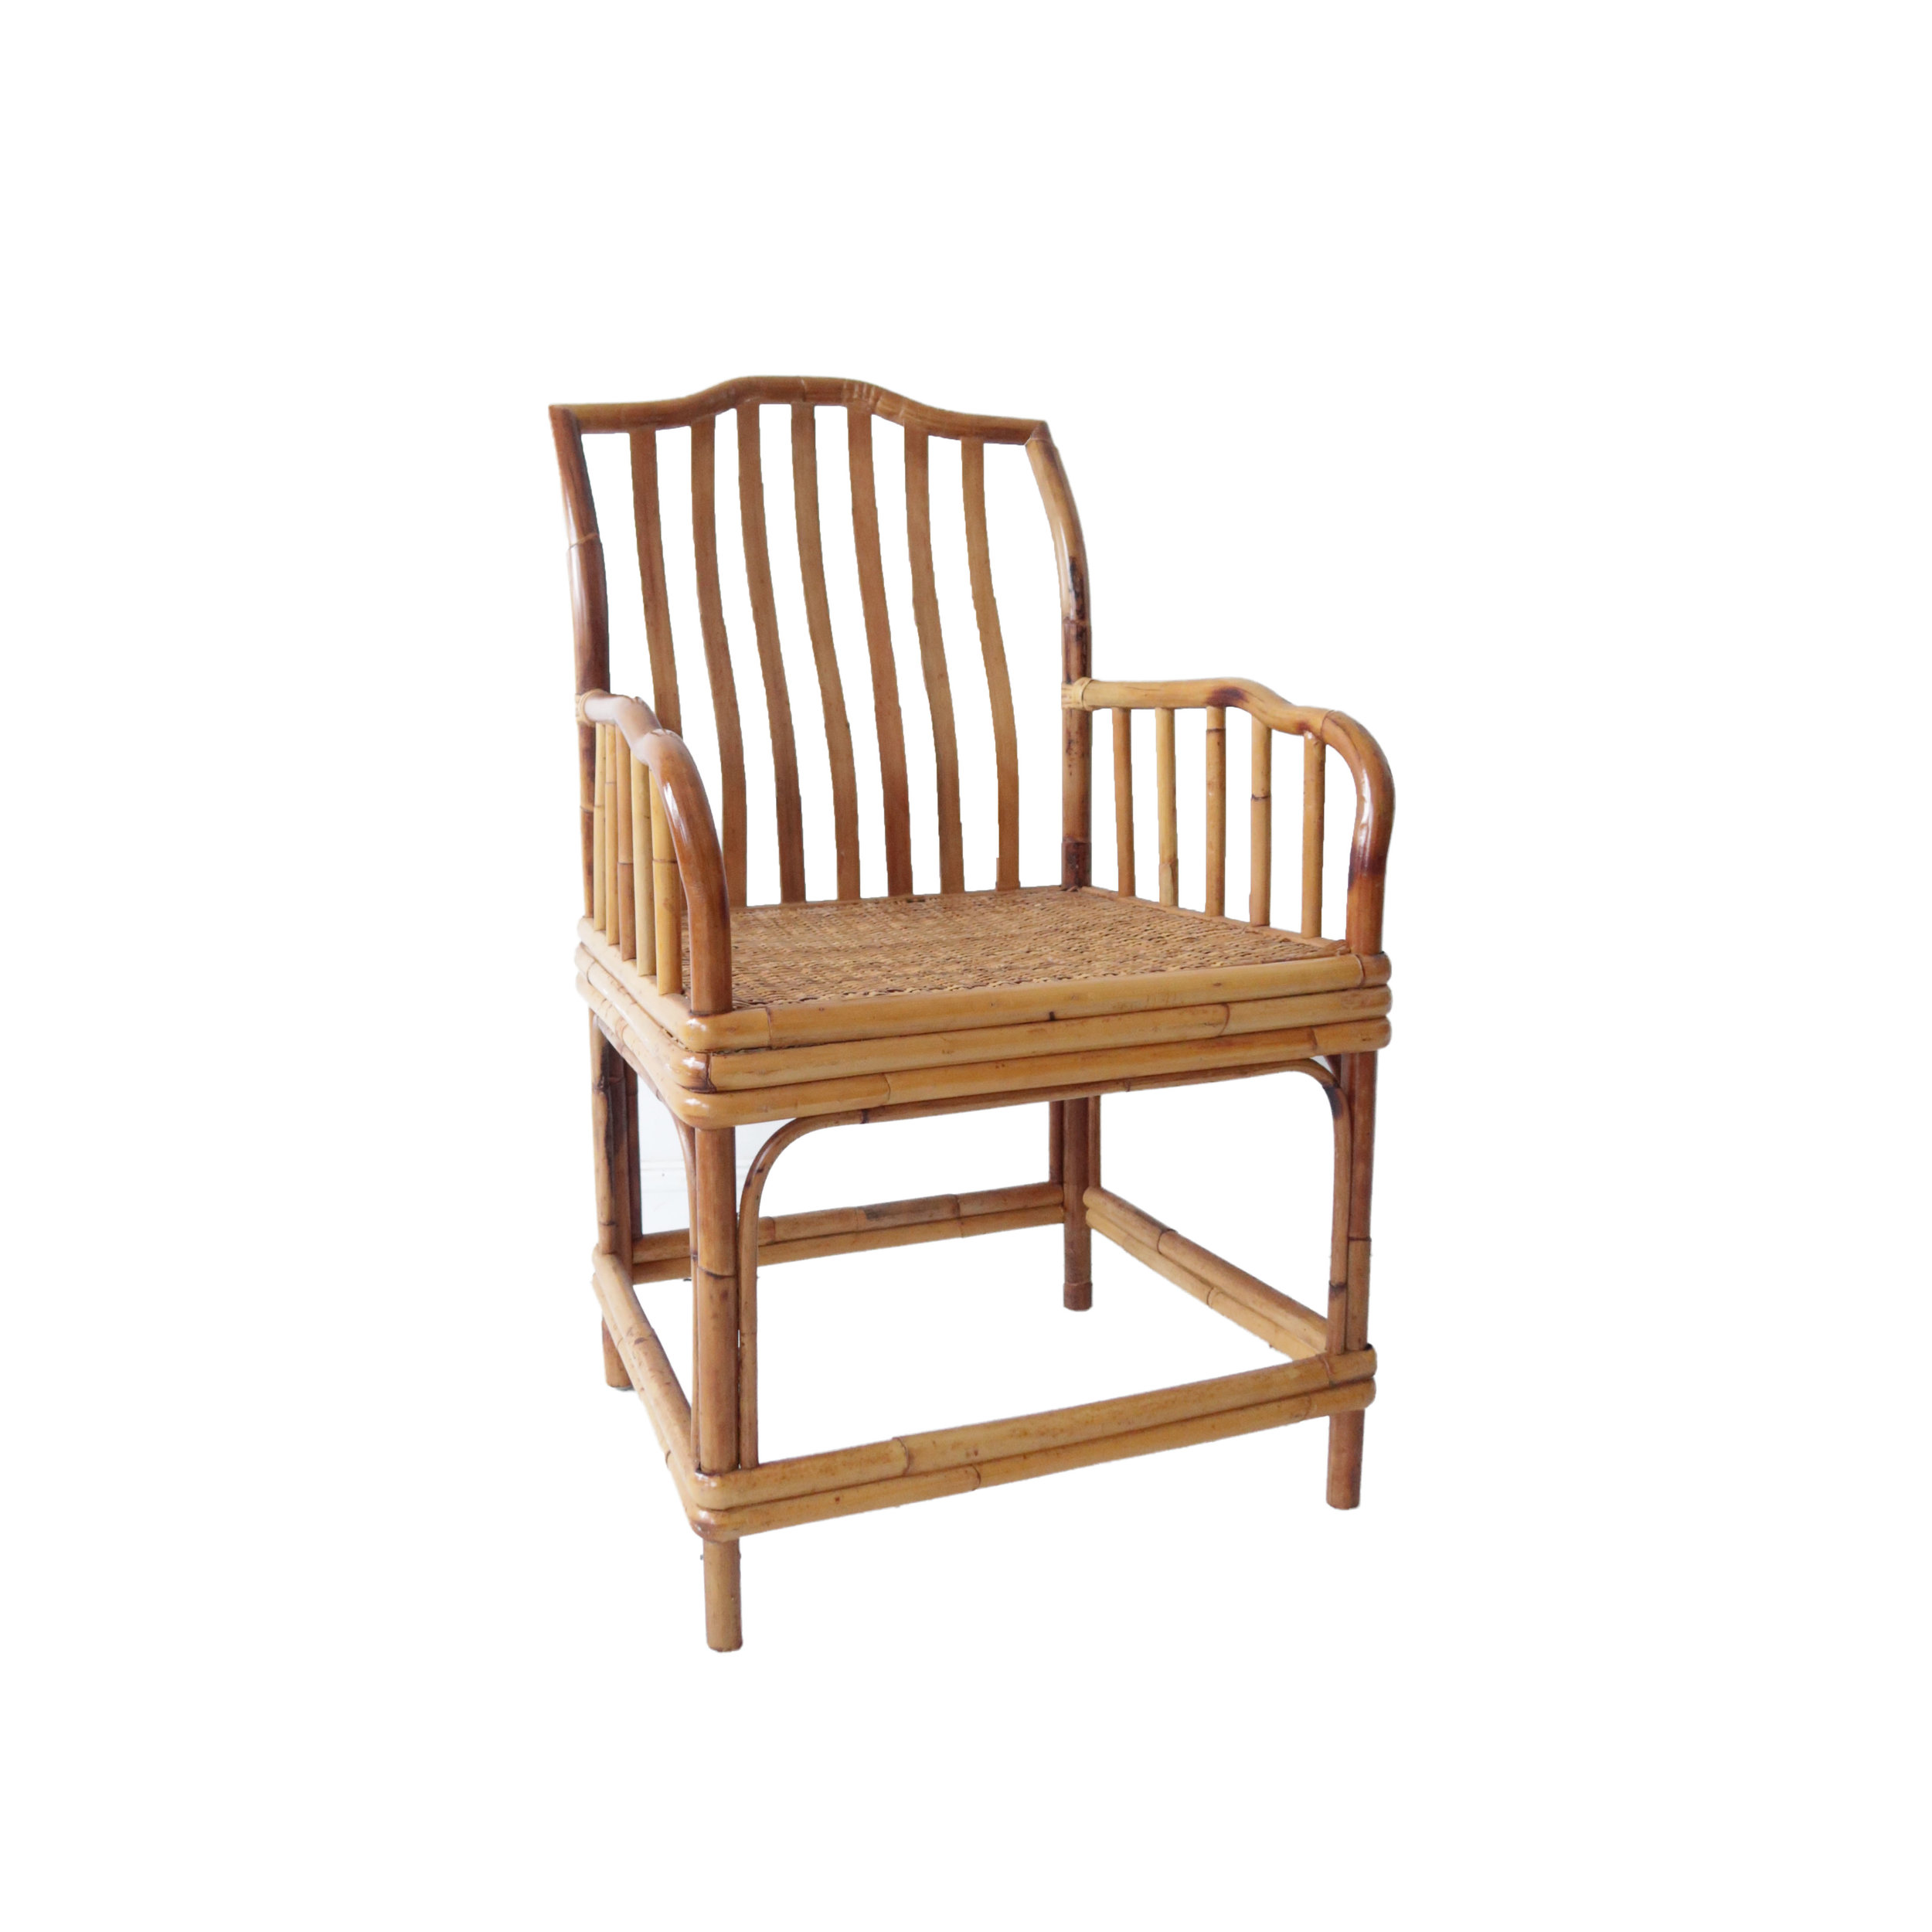 vintage bamboo arm chair.jpg